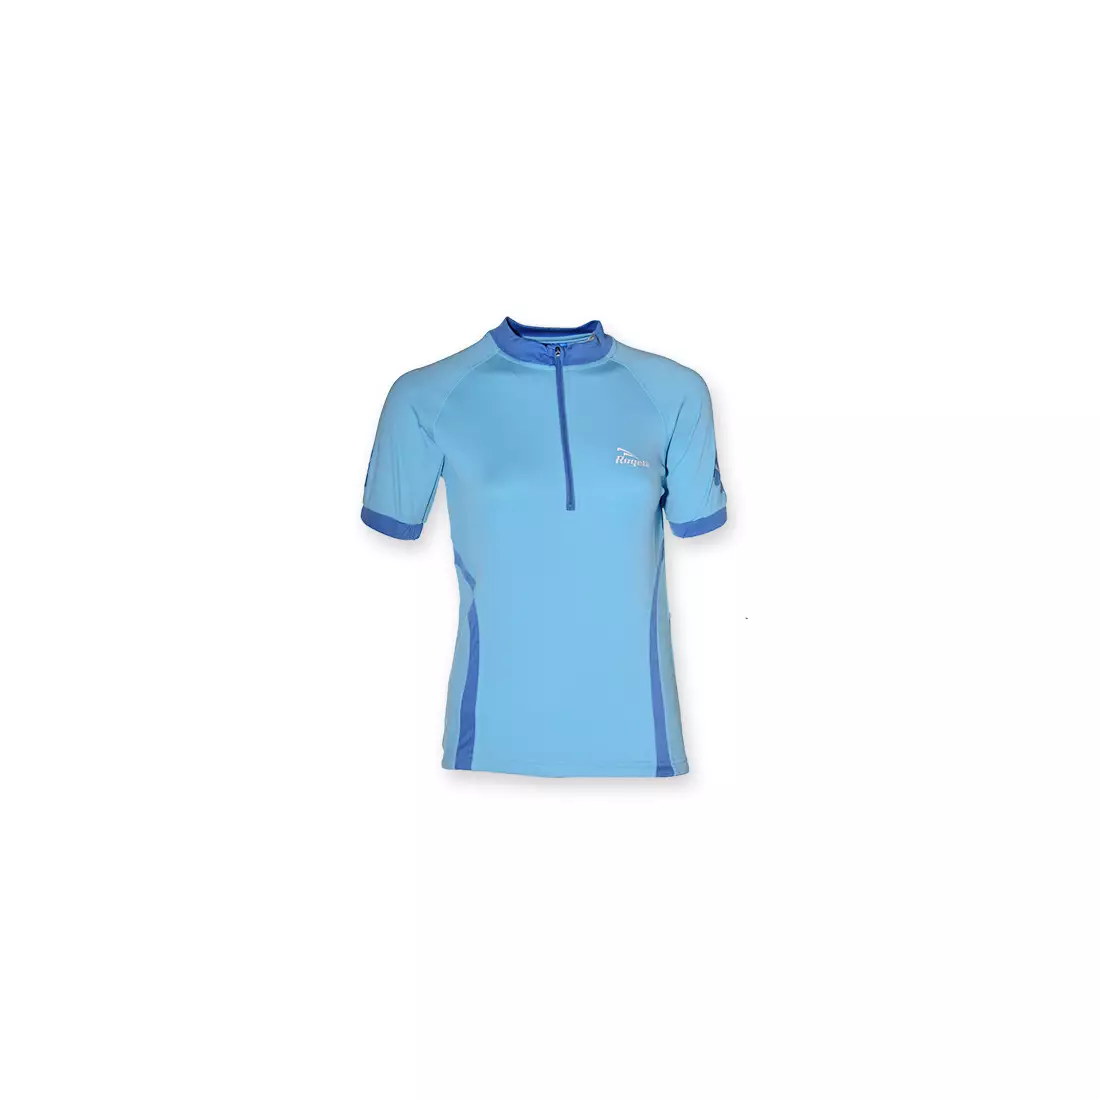 ROGELLI CANDY - dámský cyklistický dres, barva: Modrá